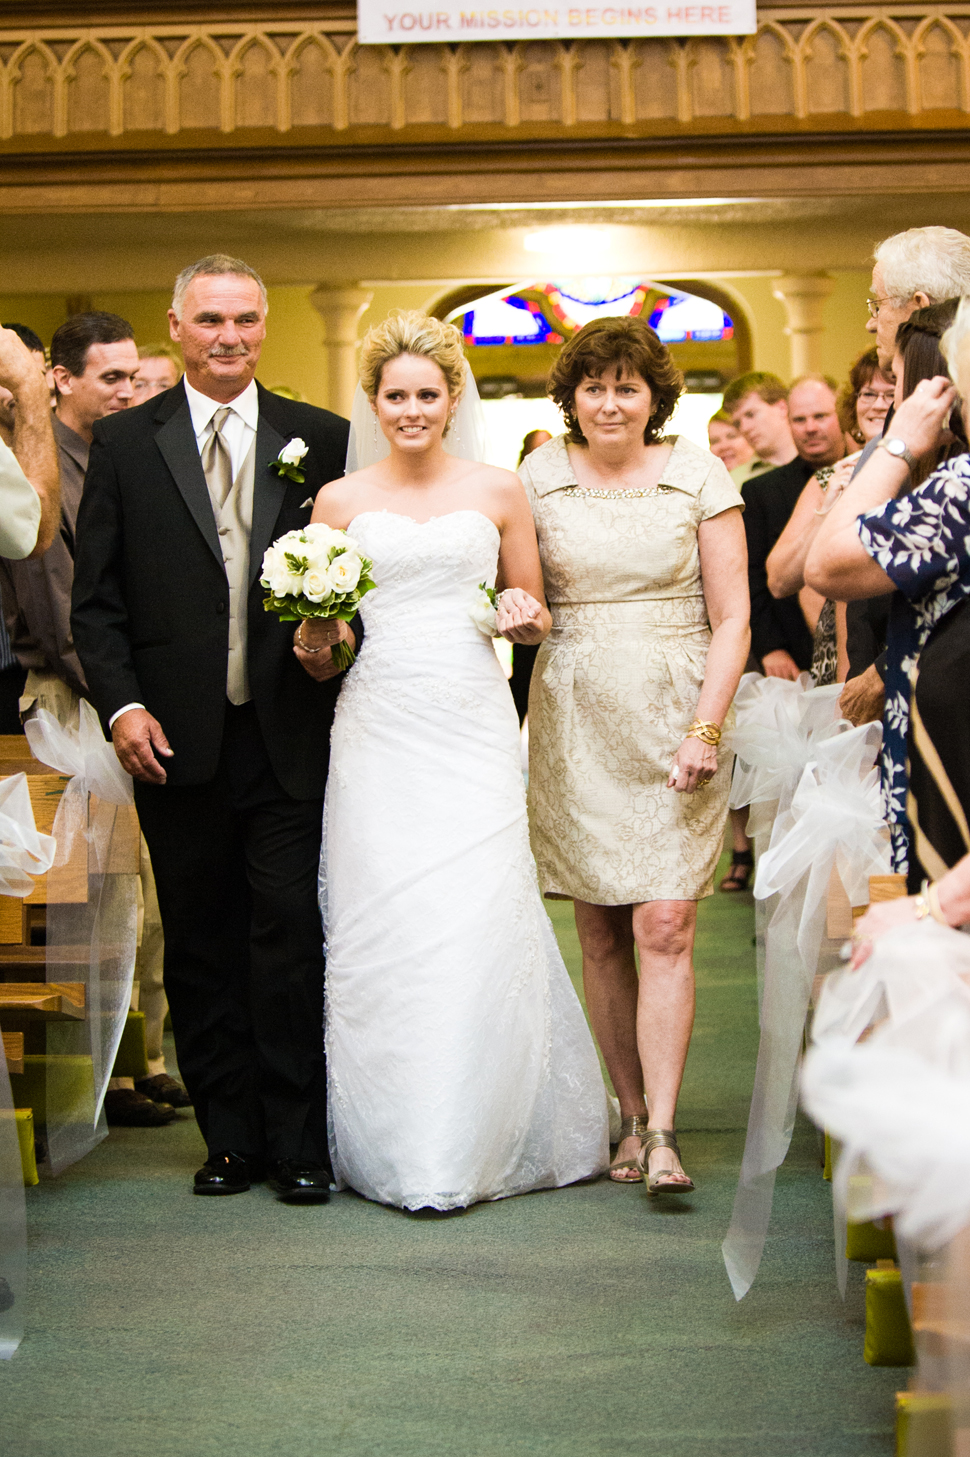 Parents walking the Bride down the aisle | Wedding Photographer Blenheim Ontario